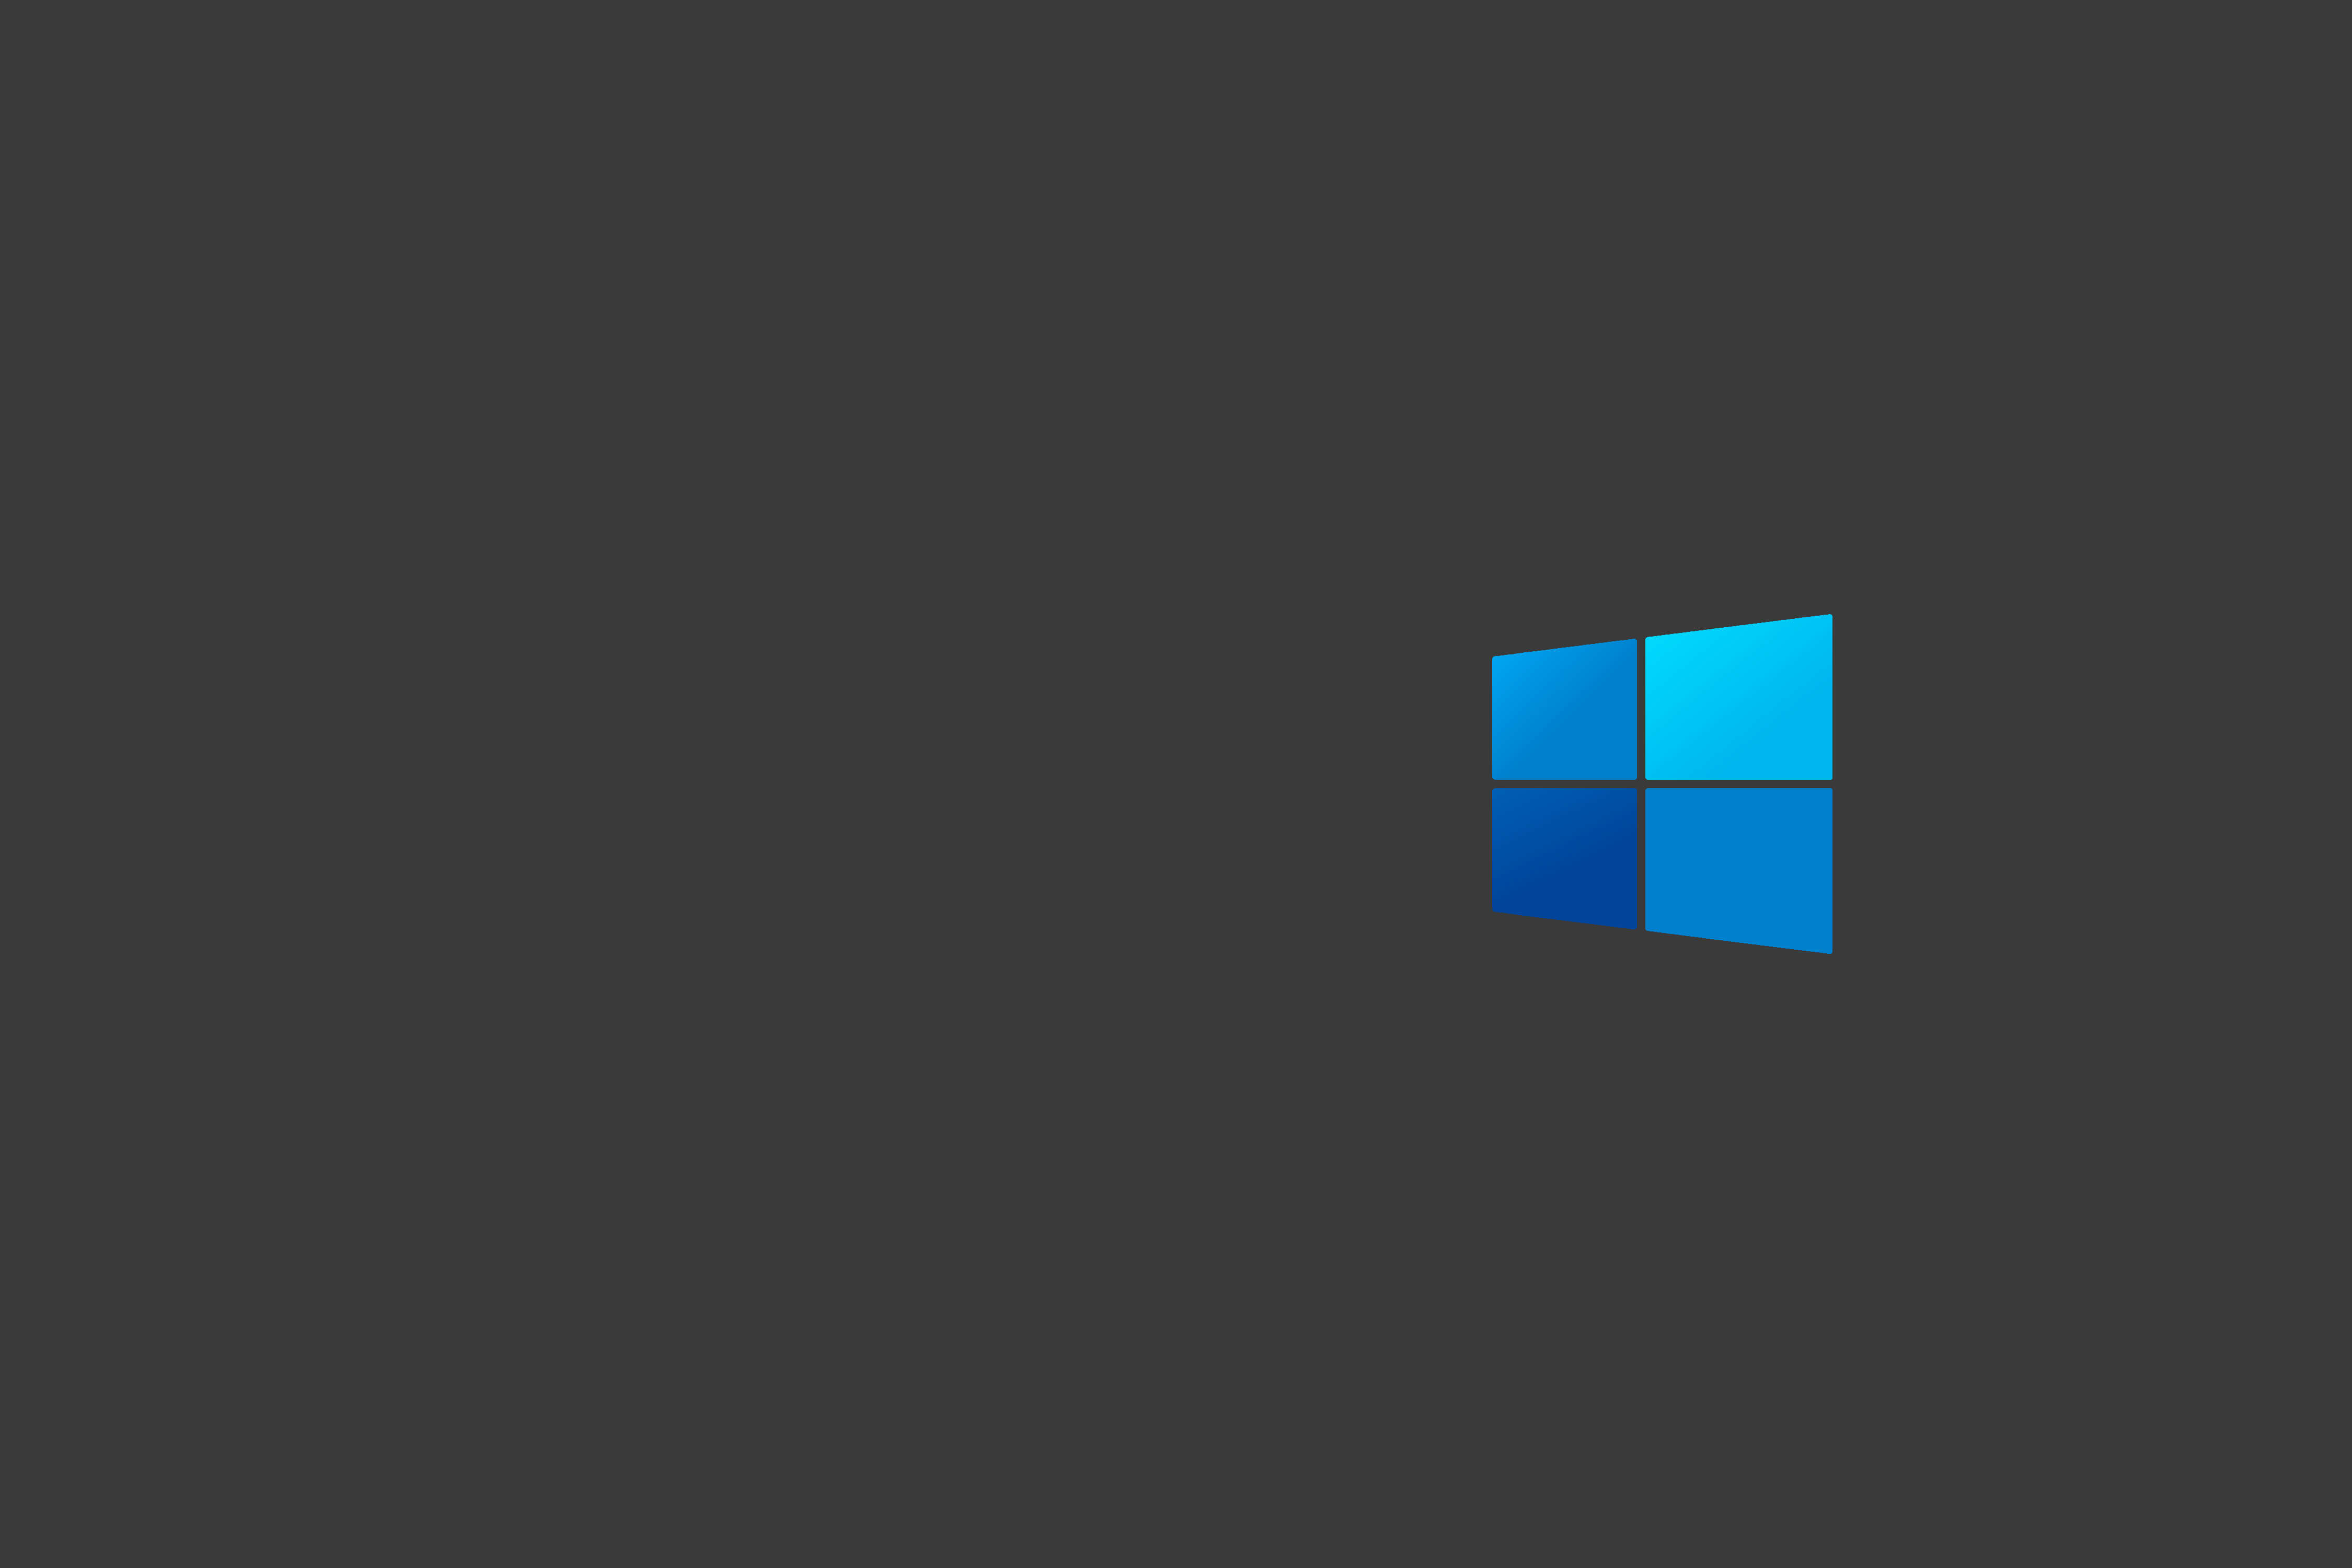 Windows 10 Dark Logo Minimal Wallpaper, HD Minimalist 4K Wallpapers,  Images, Photos and Background - Wallpapers Den